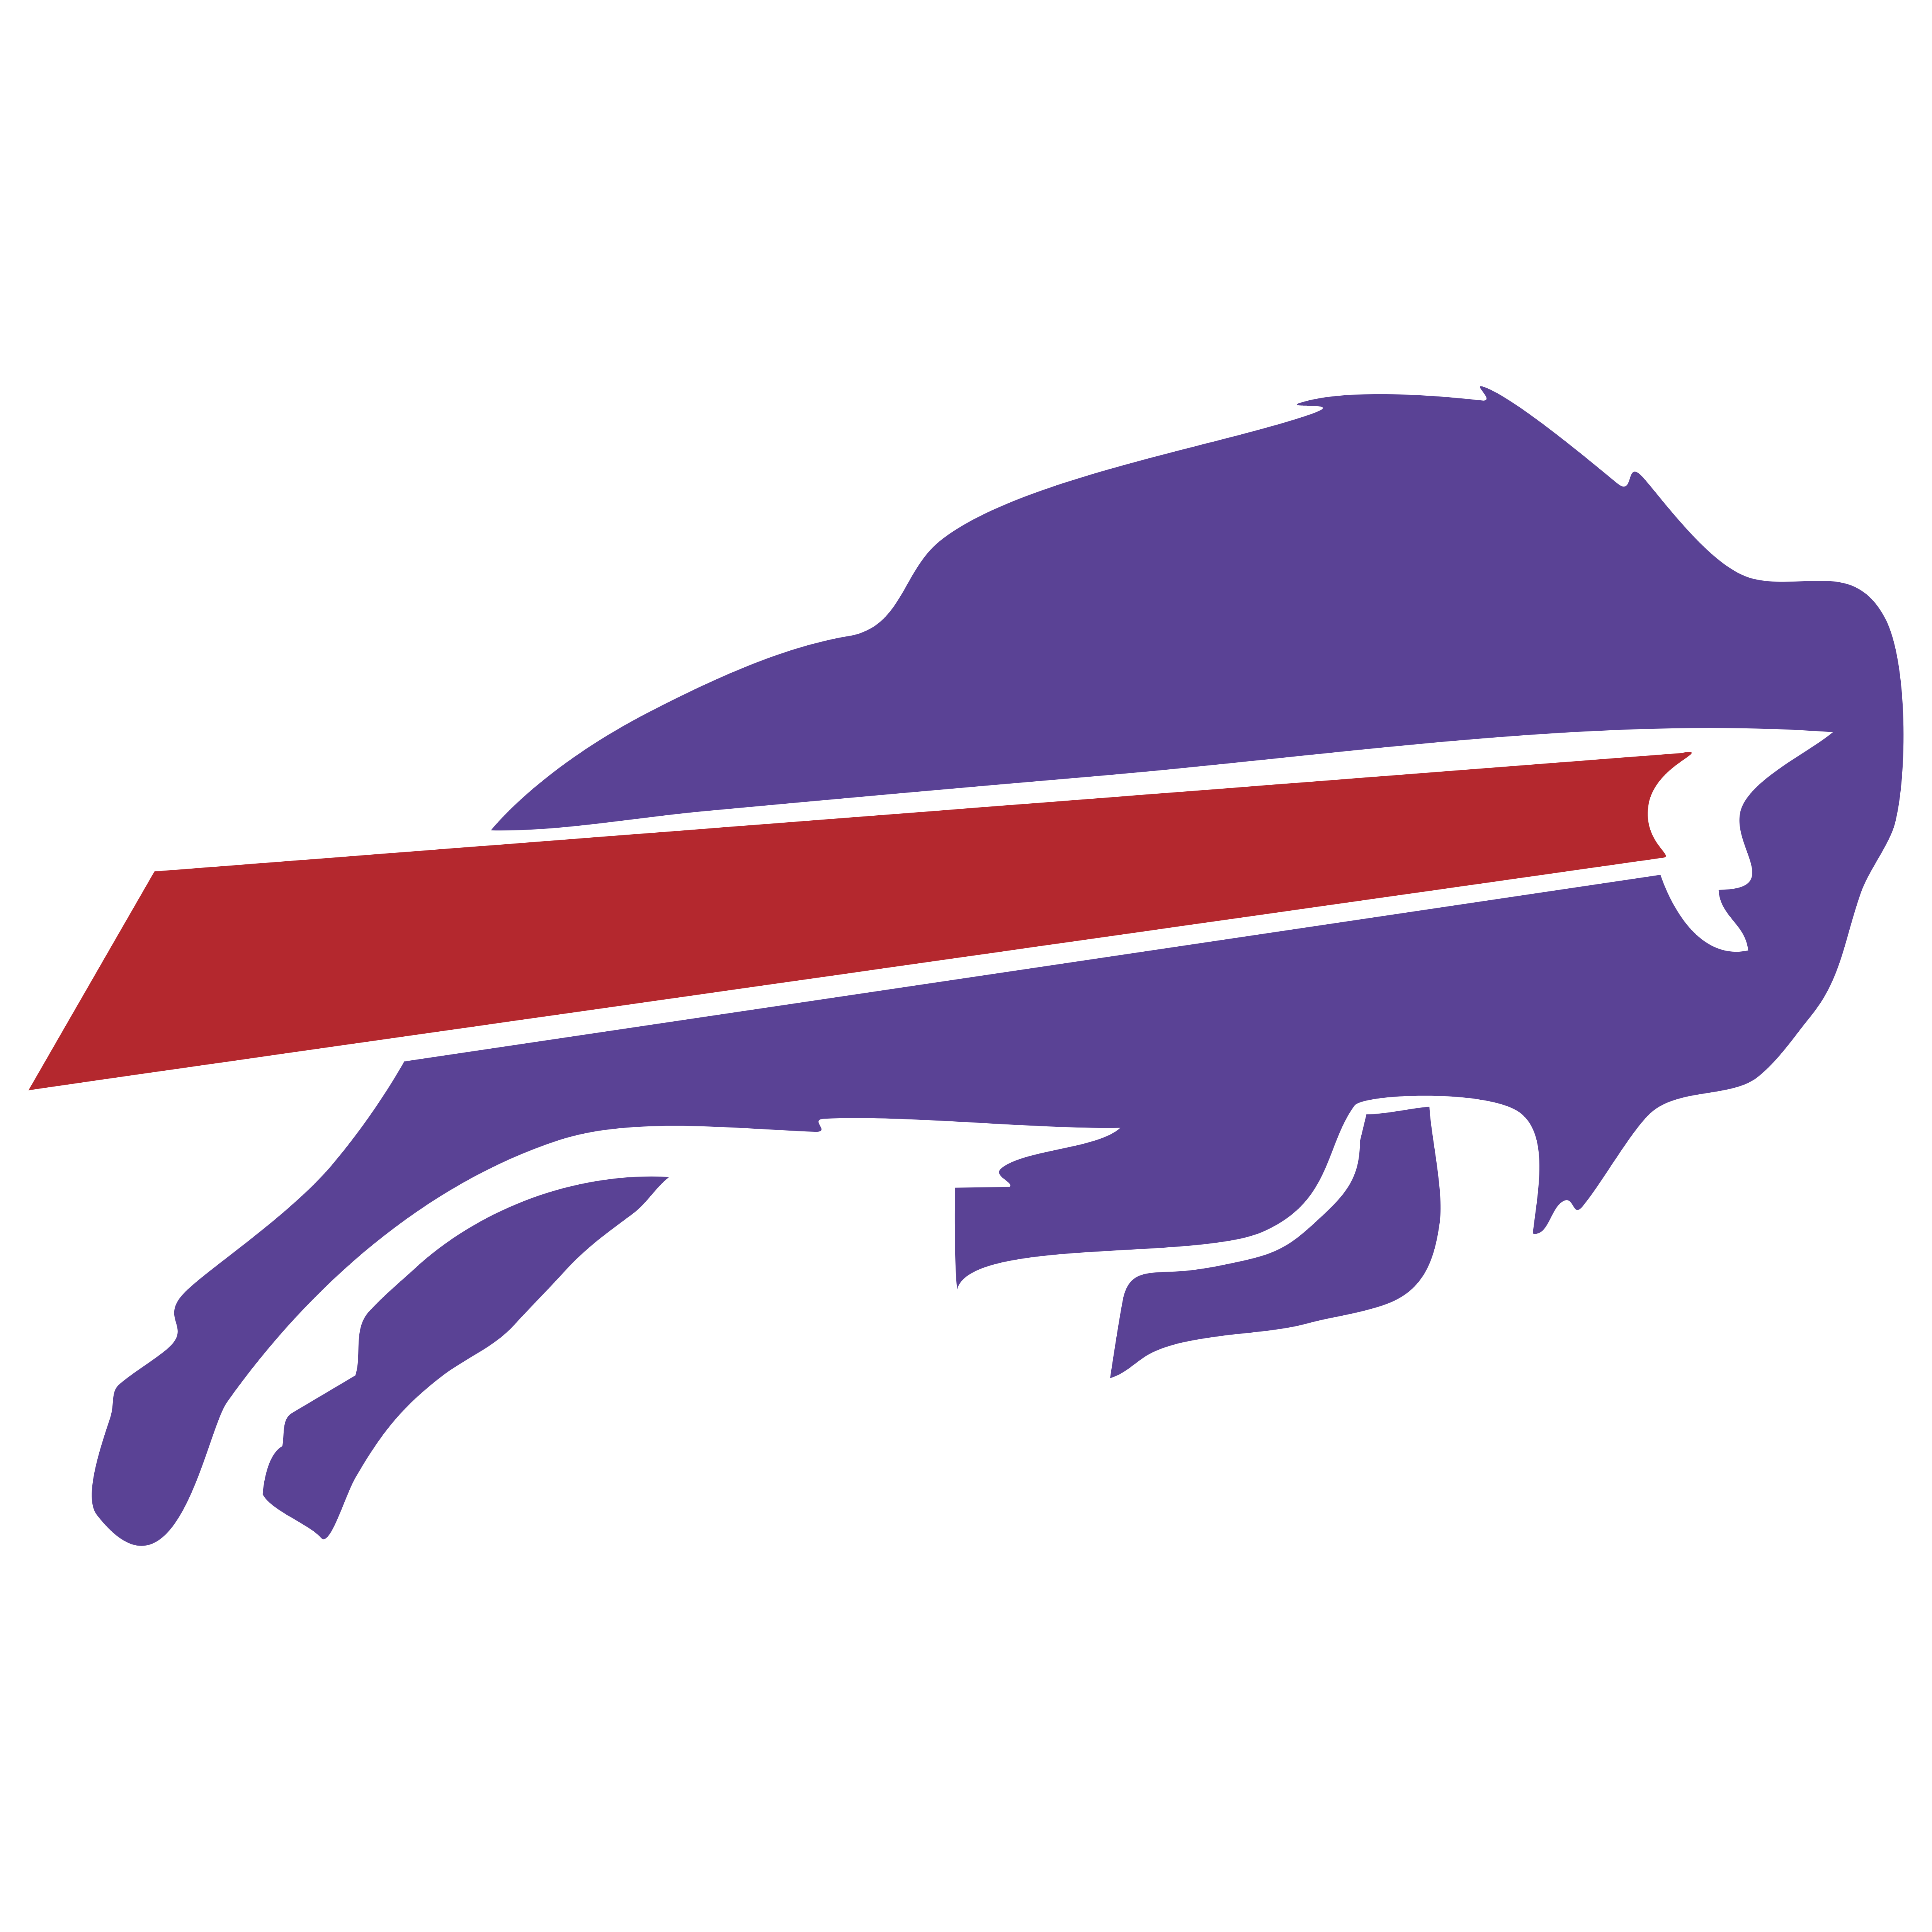 Buffalo Bills News